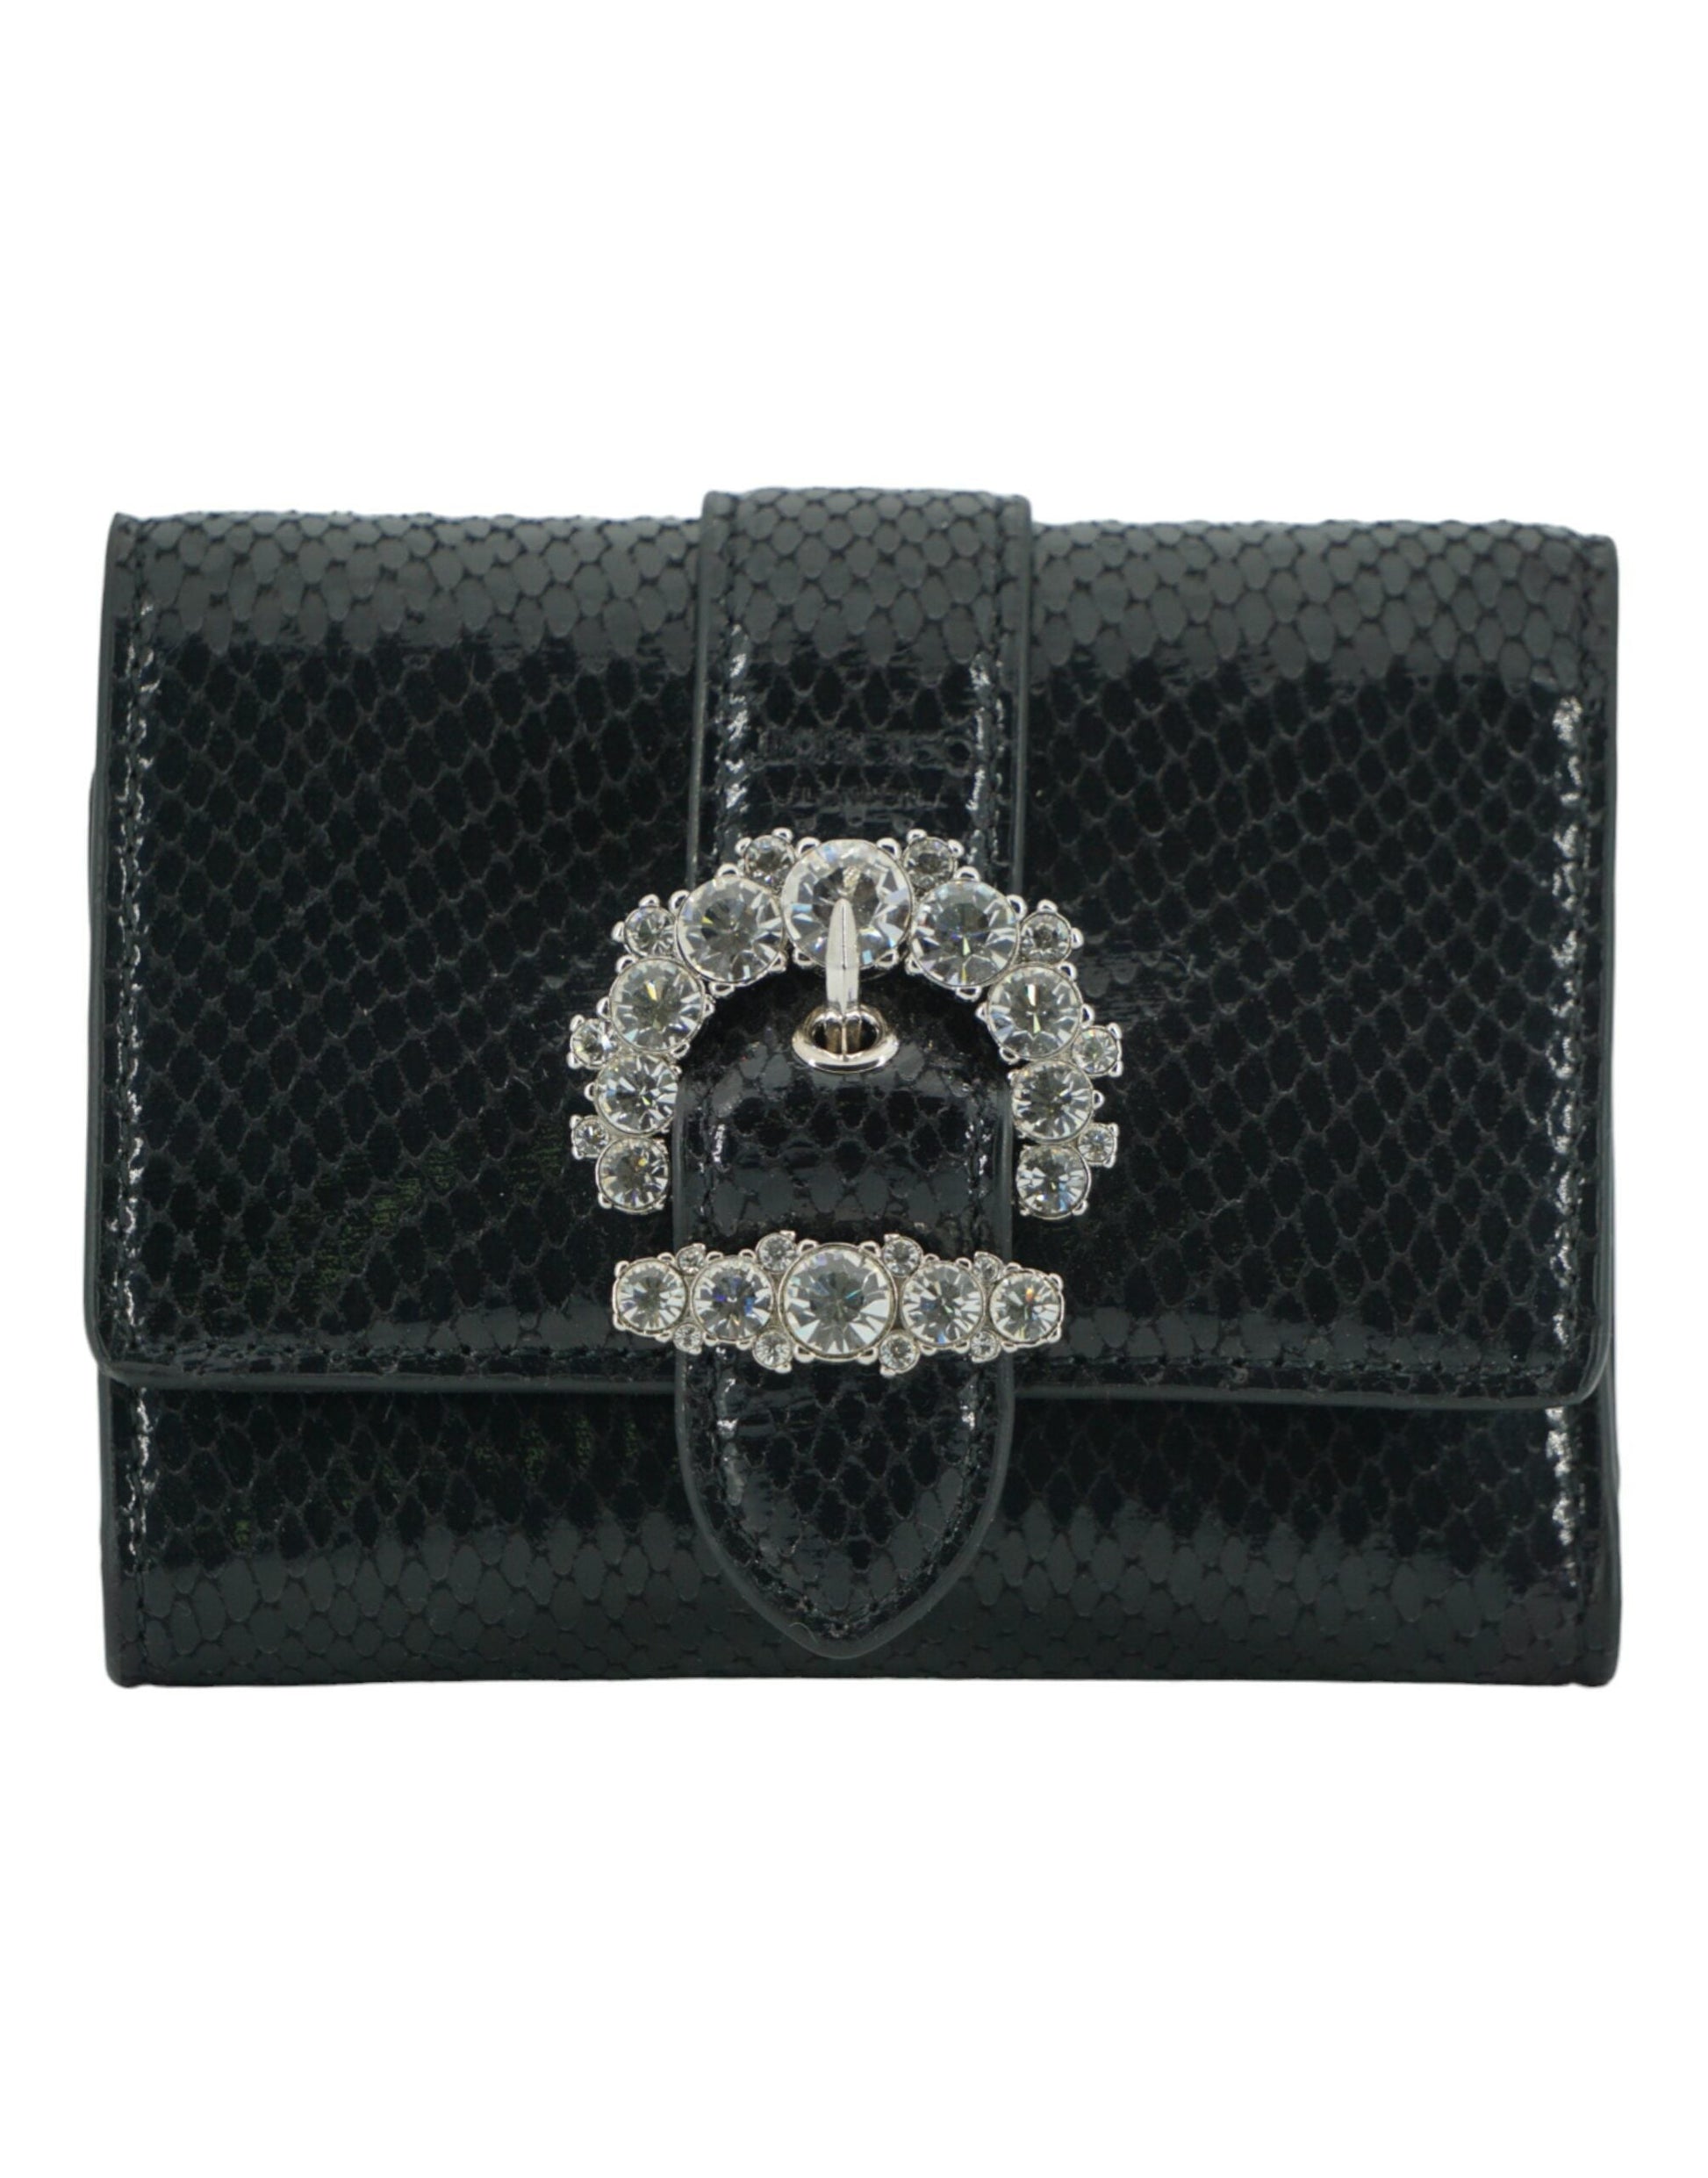 Fashionsarah.com Fashionsarah.com Jimmy Choo Black Leather Card Holder Wallet